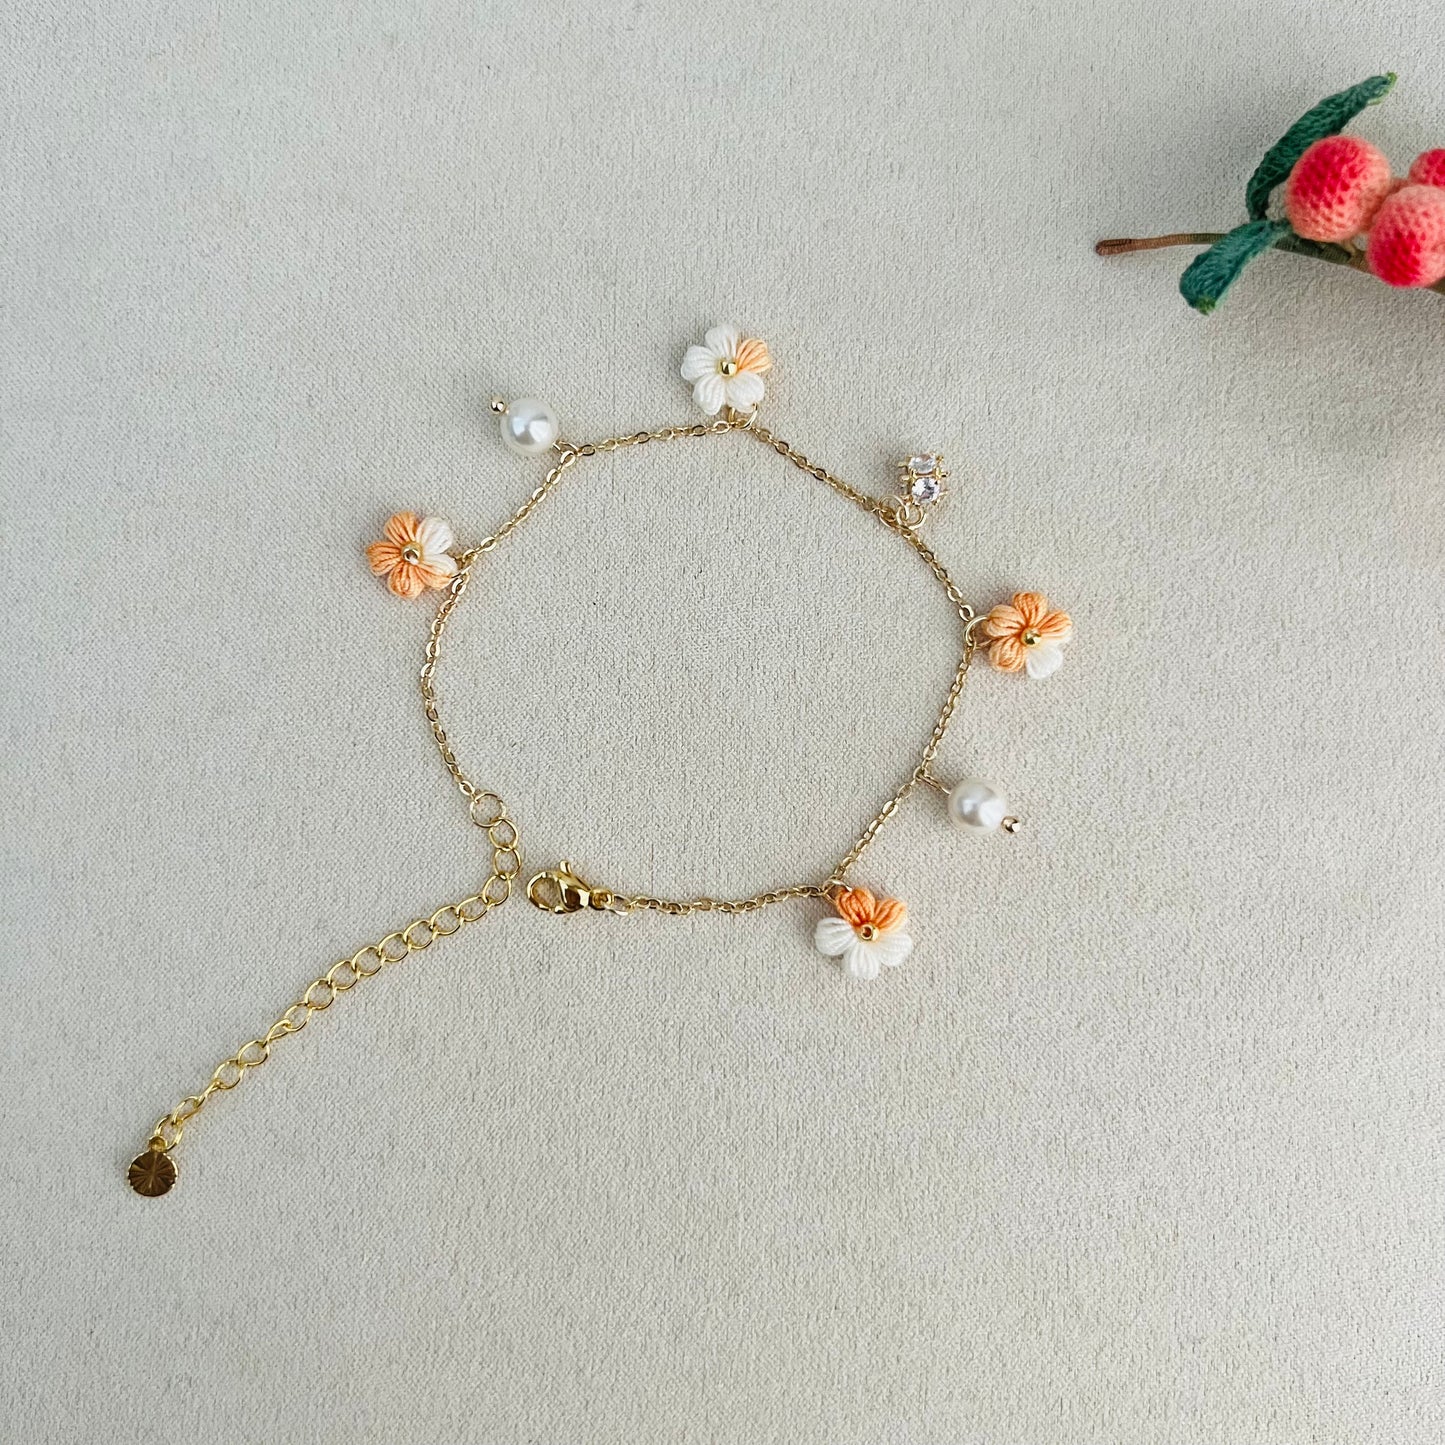 Micro Crochet Flower Bracelet | Crochet Bracelet | Handmade Jewellery